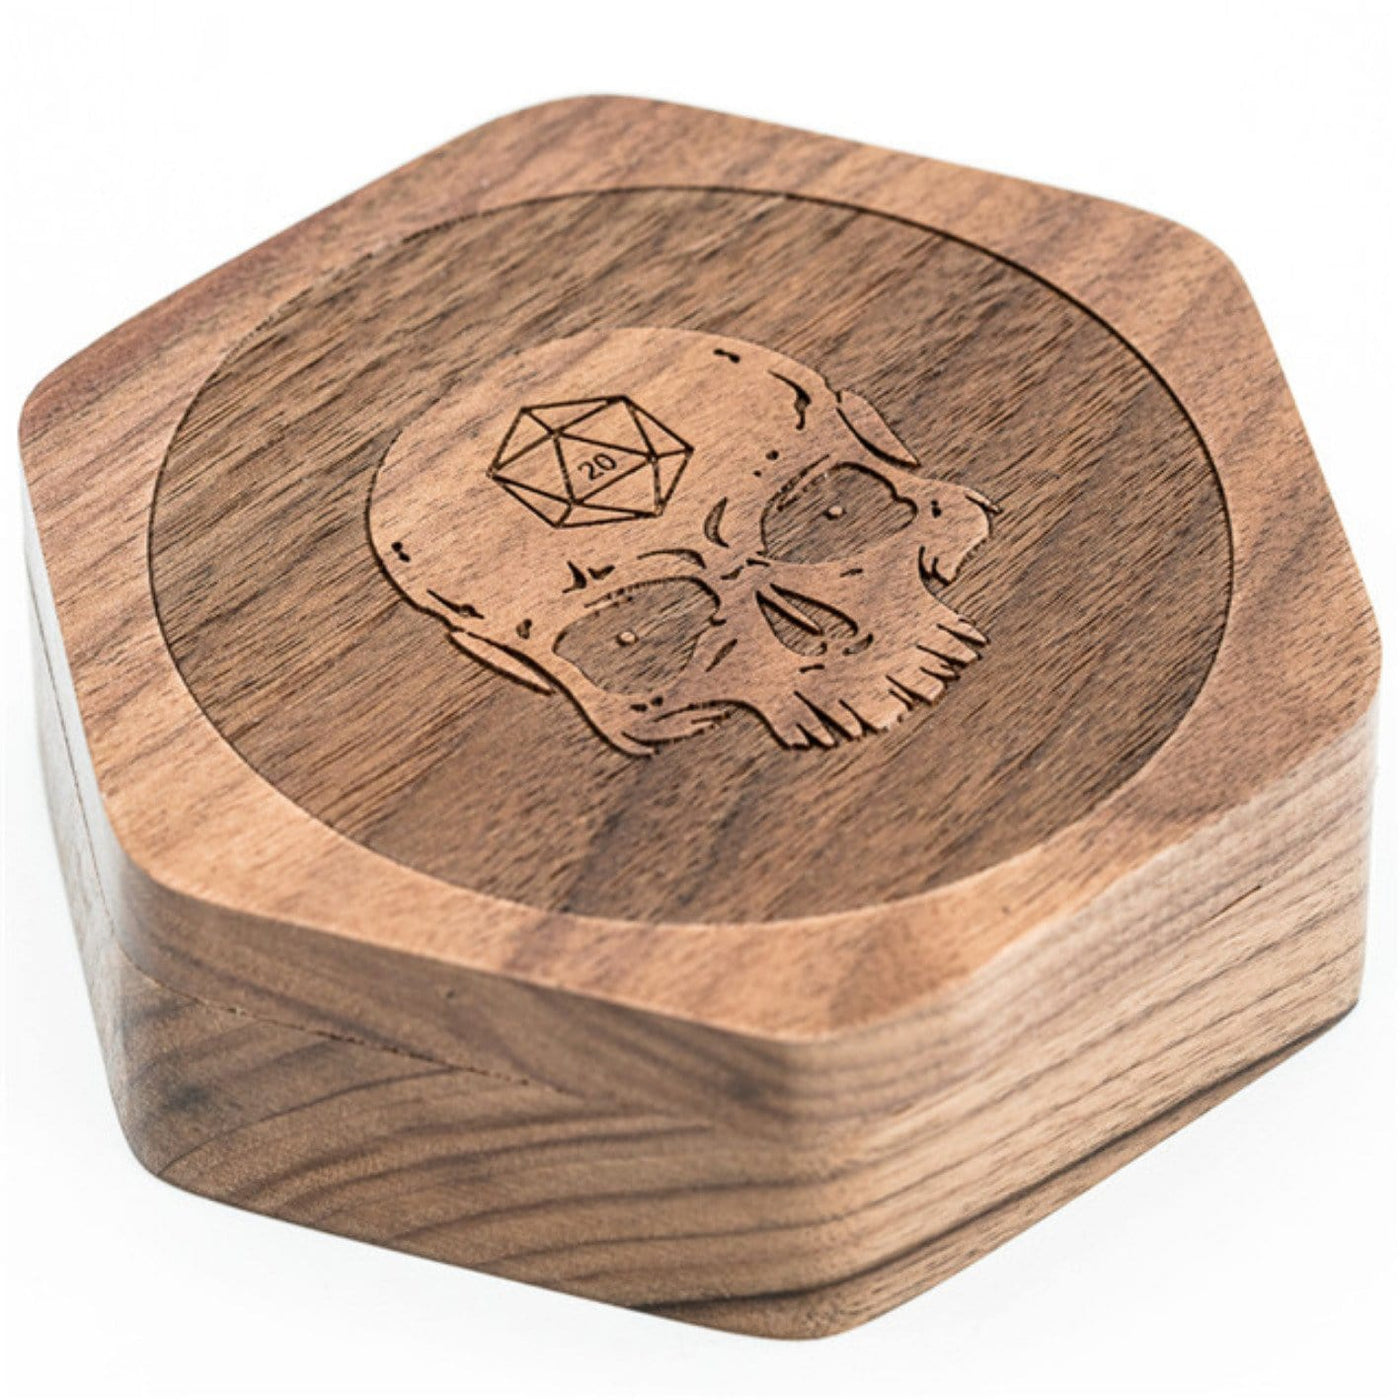 Walnut Hexagon Wooden Dice Box with Skull Dice Box Foam Brain Games